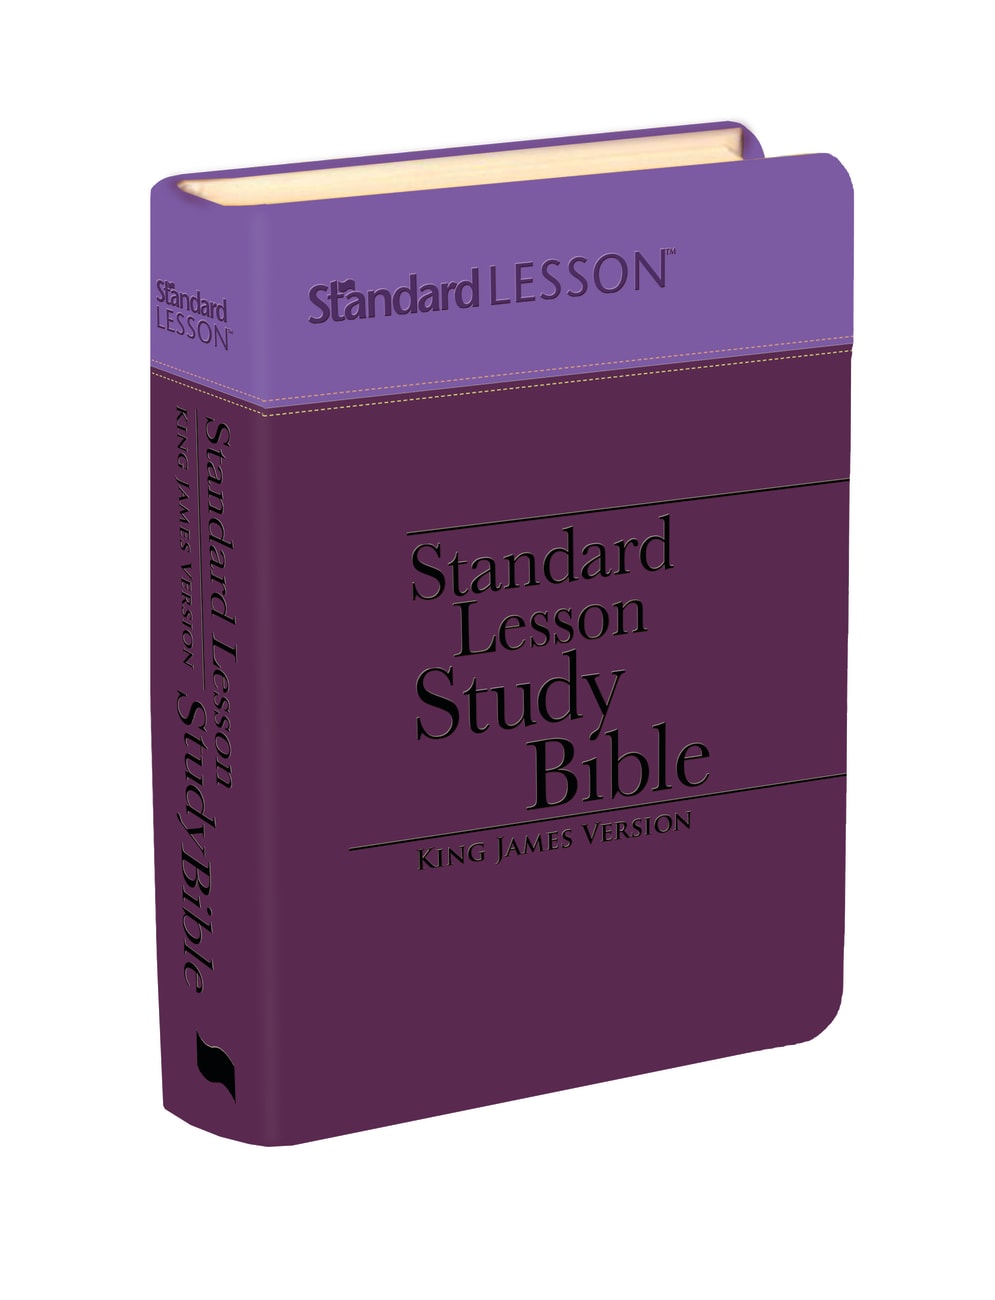 KJV Standard Lesson Study Bible Purple Women's Edition Imitation Leather